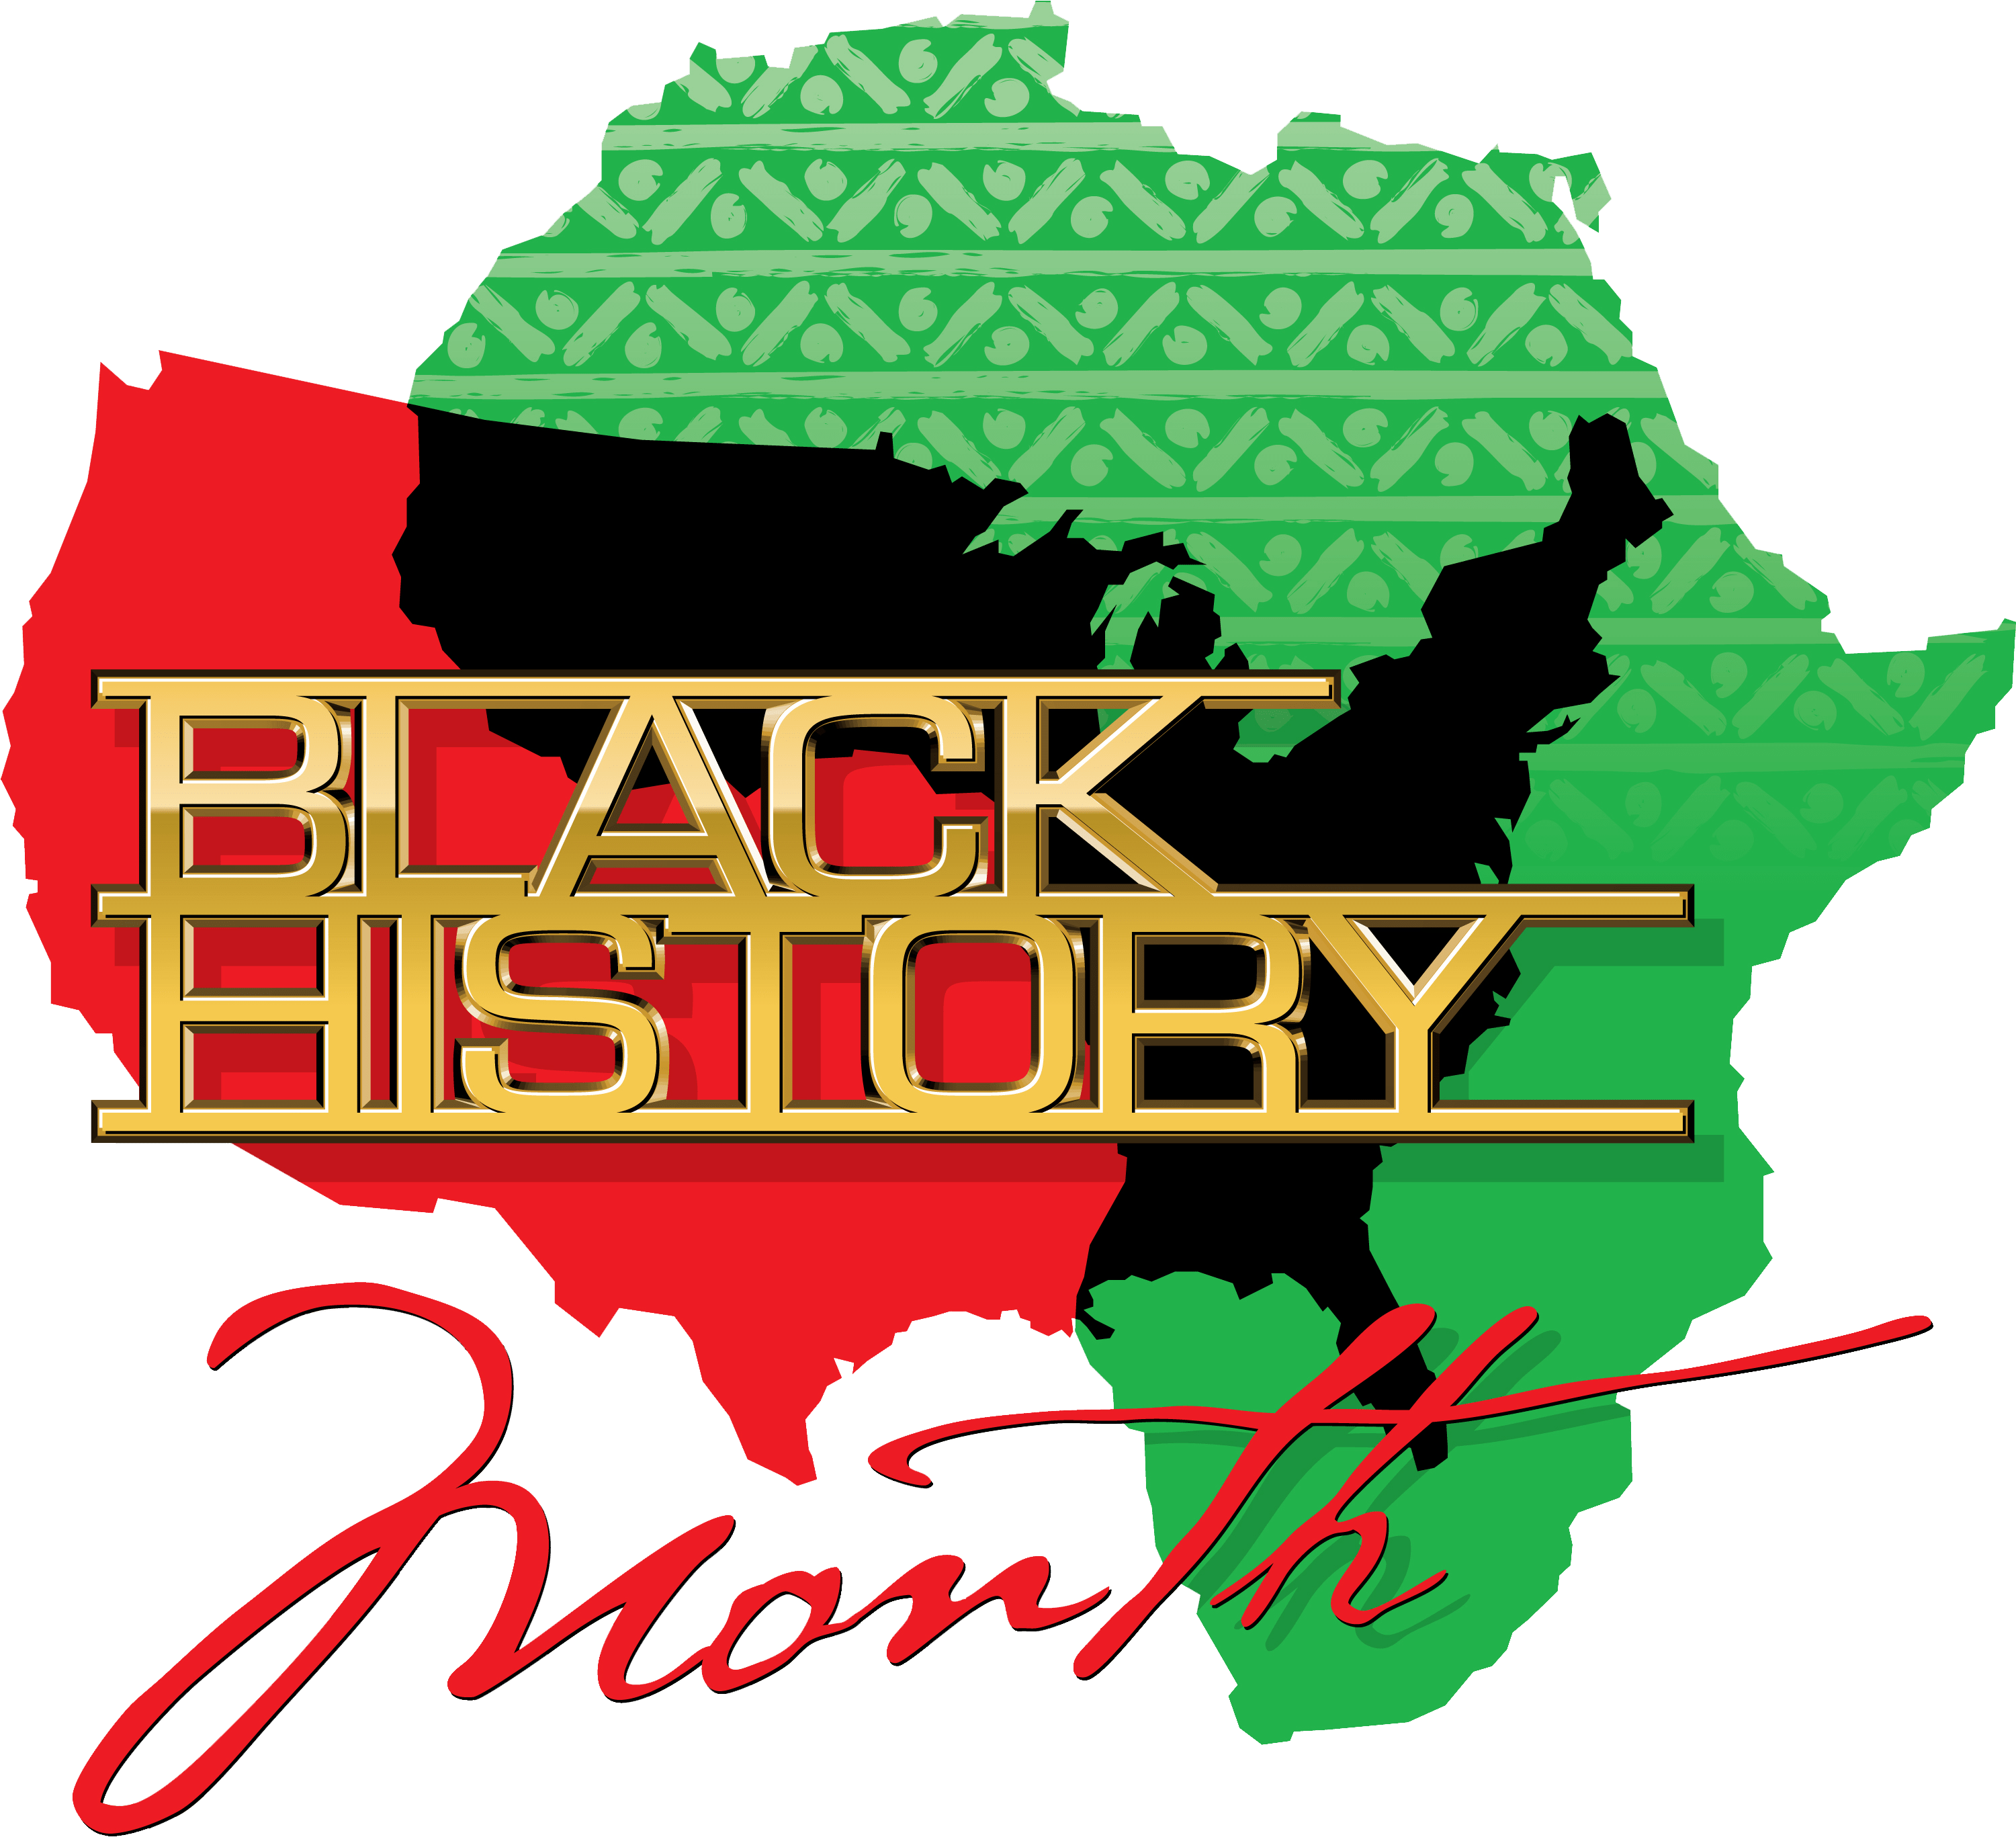 Black month. Black History. Black History month. Black History эмблема. Black History month logo.